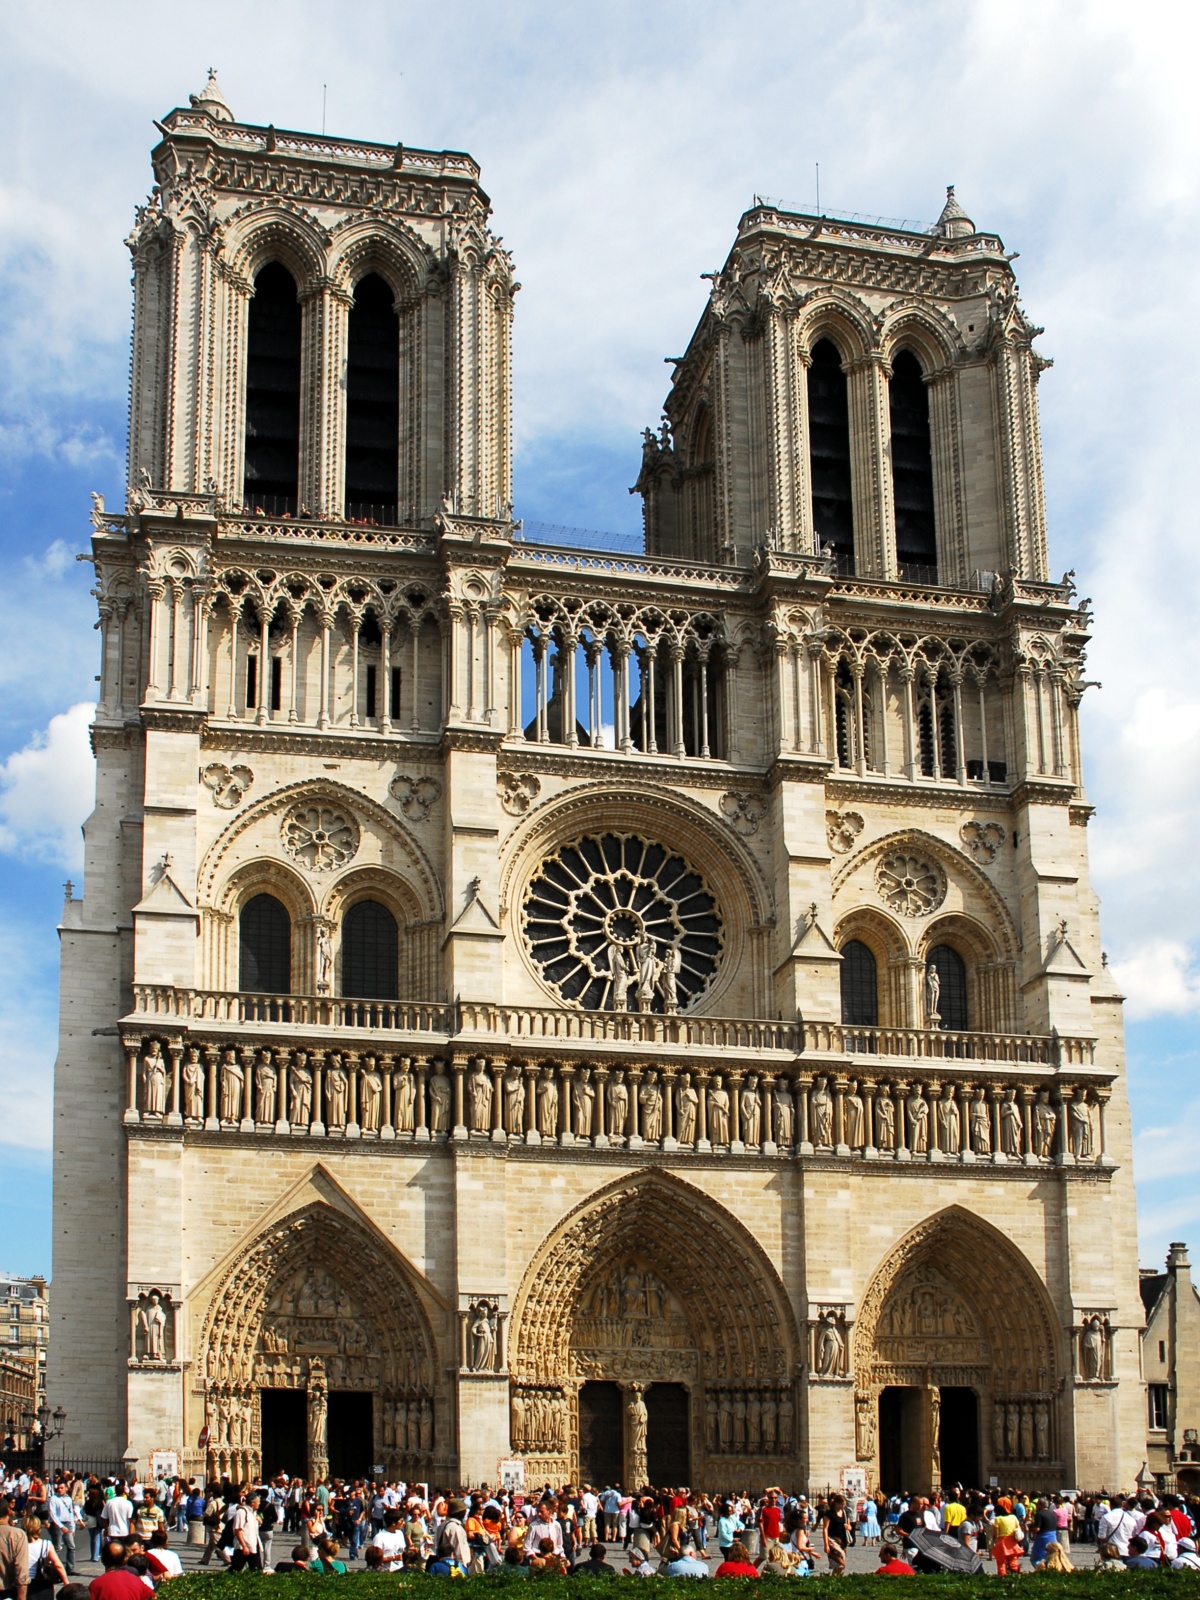 File:060806-France-Paris-Notre Dame.jpg - Wikimedia Commons